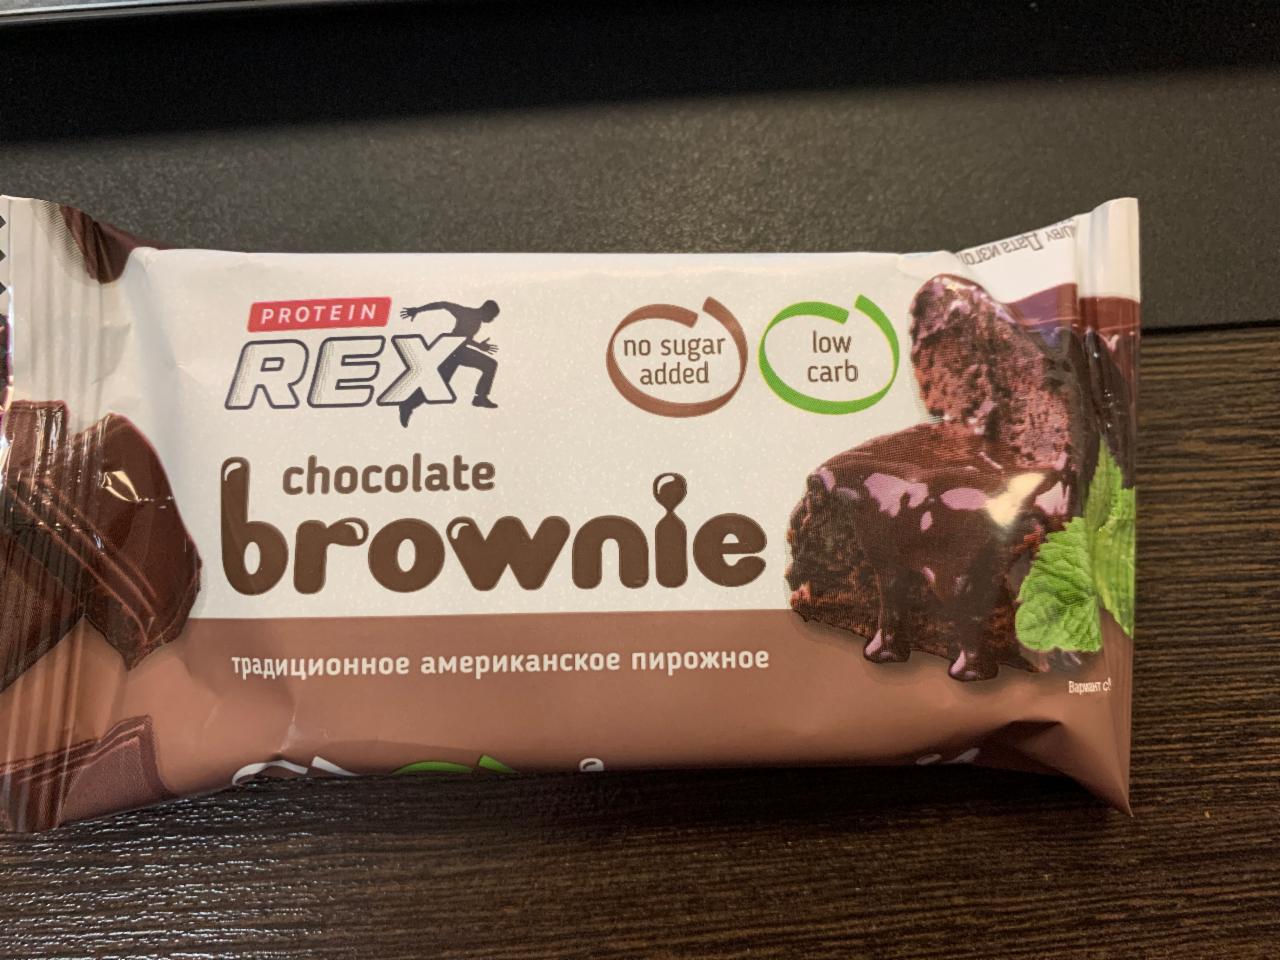 Протеиновое пирожное брауни. Пирожное Protein Rex Brownie. Protein Rex Tiramisu пирожное. Protein Rex Chocolate Brownie пирожное с вишней 50 гр..